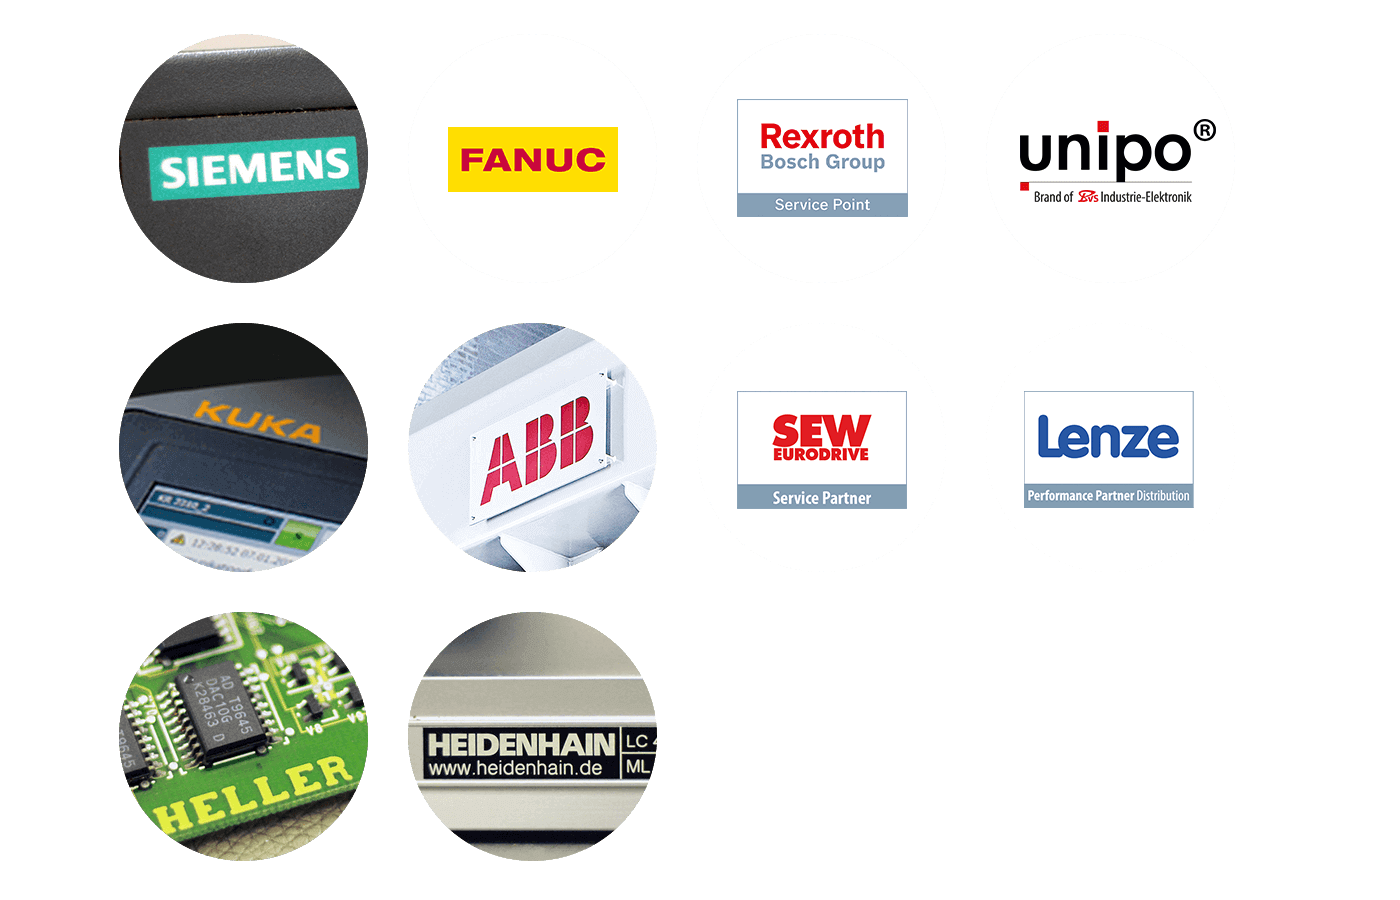 Overview of the manufacturer portfolio – BVS Industrie-Elektronik